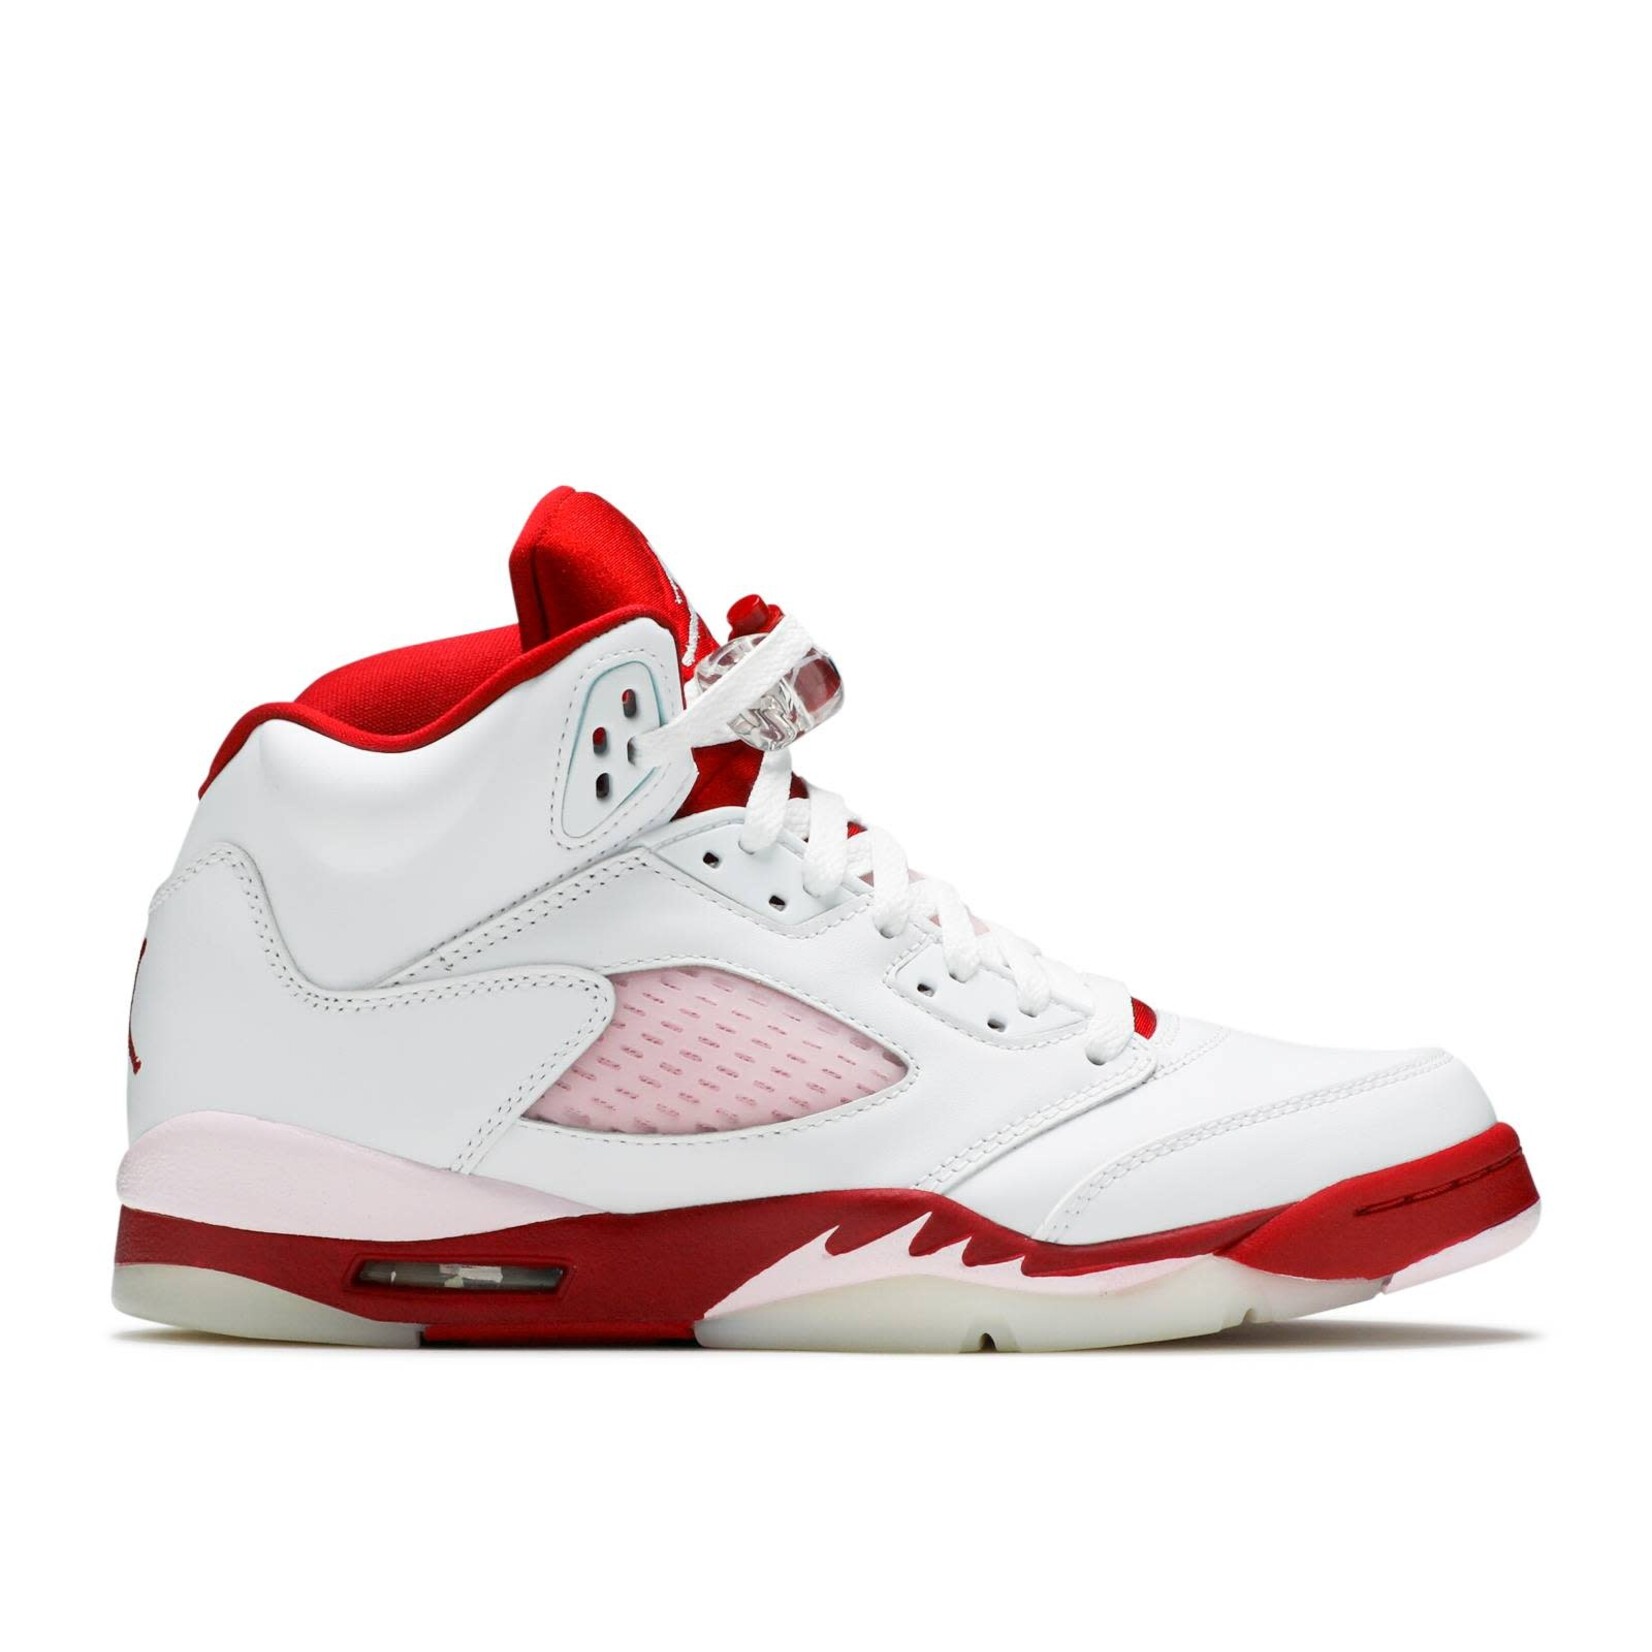 Jordan Jordan 5 Retro White Pink Red (GS) Size 7, DS BRAND NEW